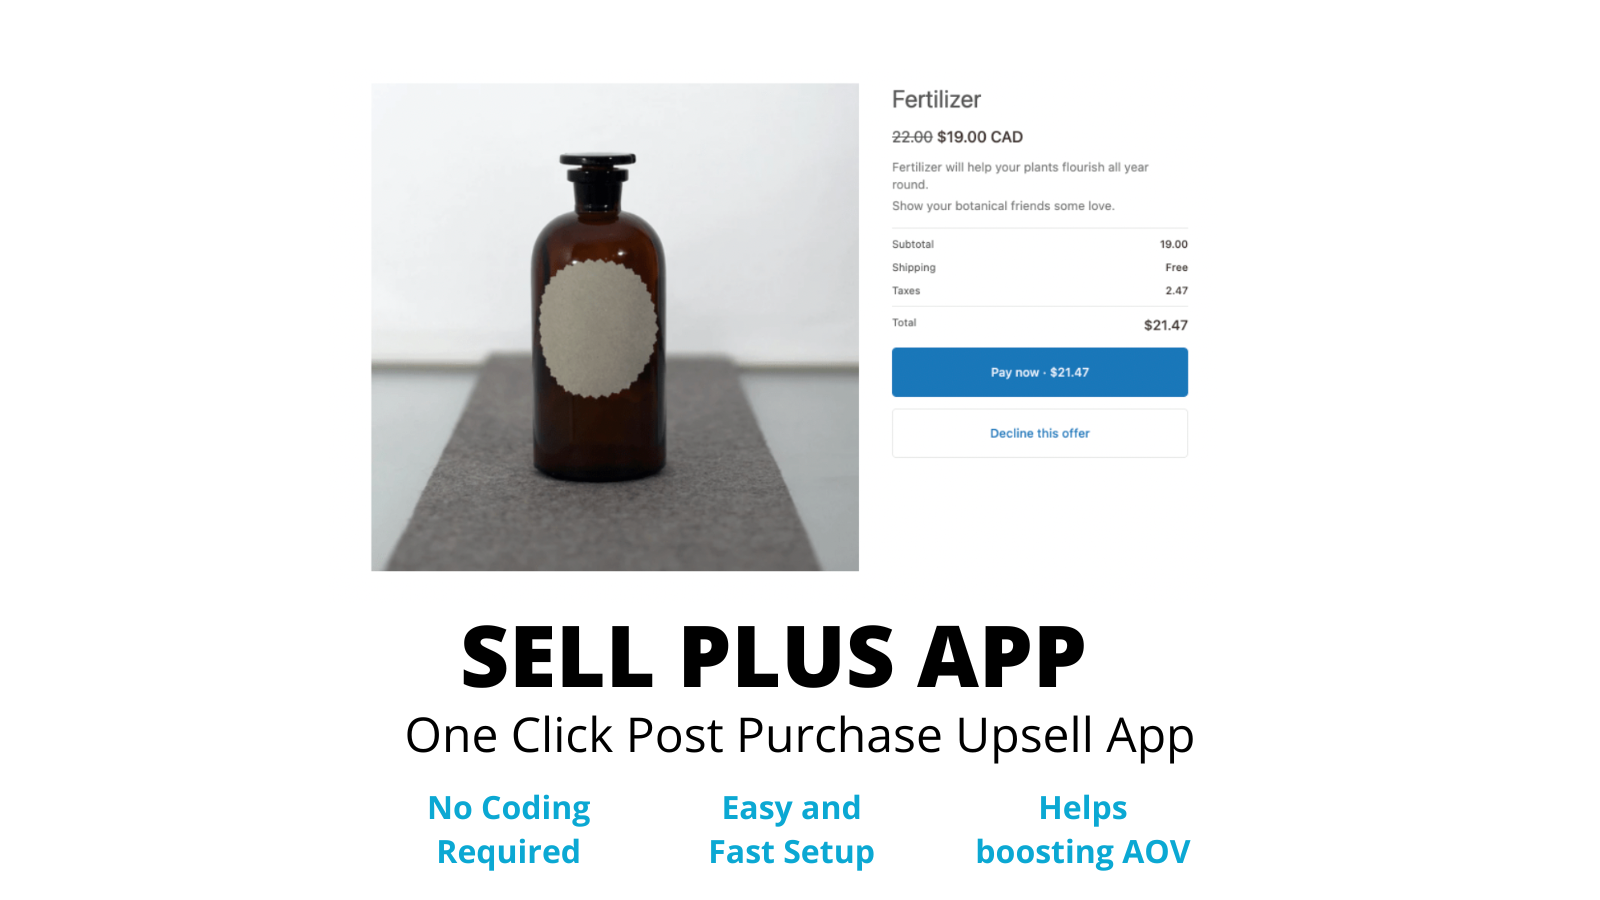 Aplicación de Upsell Post-Compra con Un Solo Clic